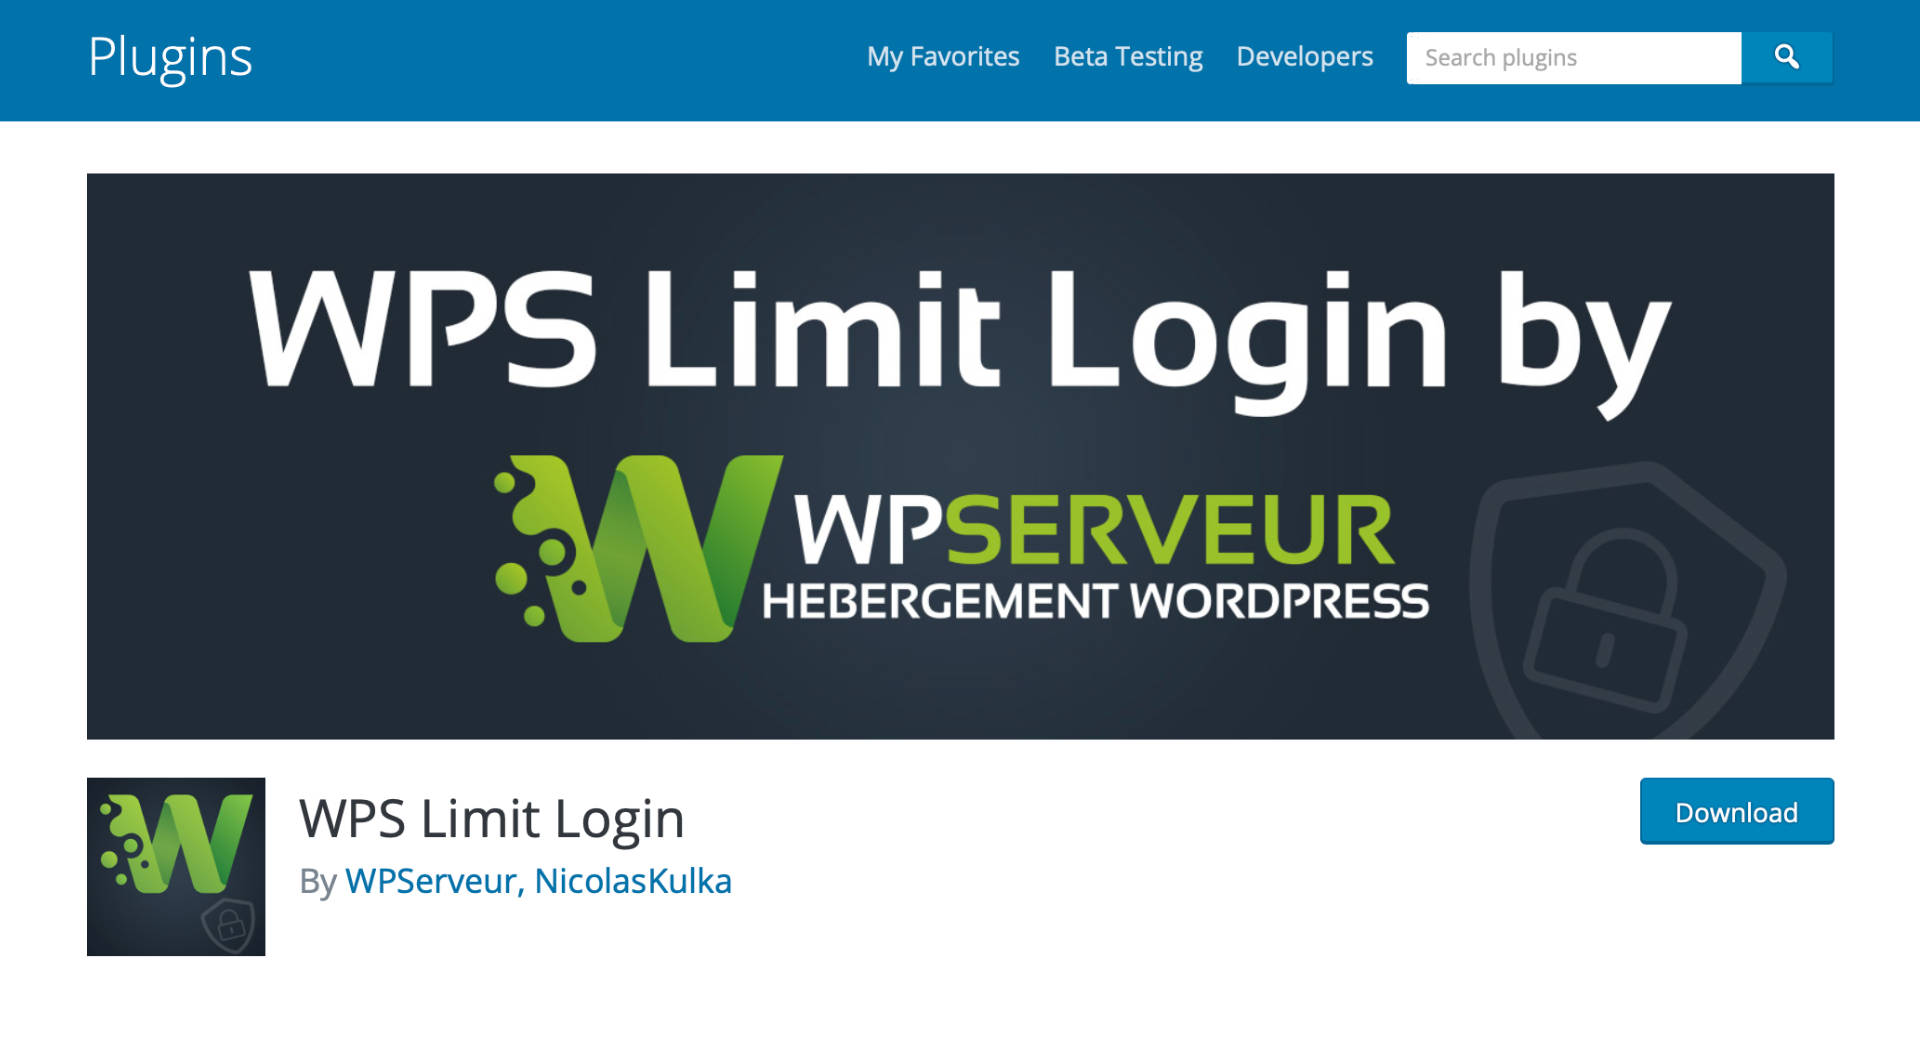 mon huitieme plugin WordPress favori : WPS Limit Login